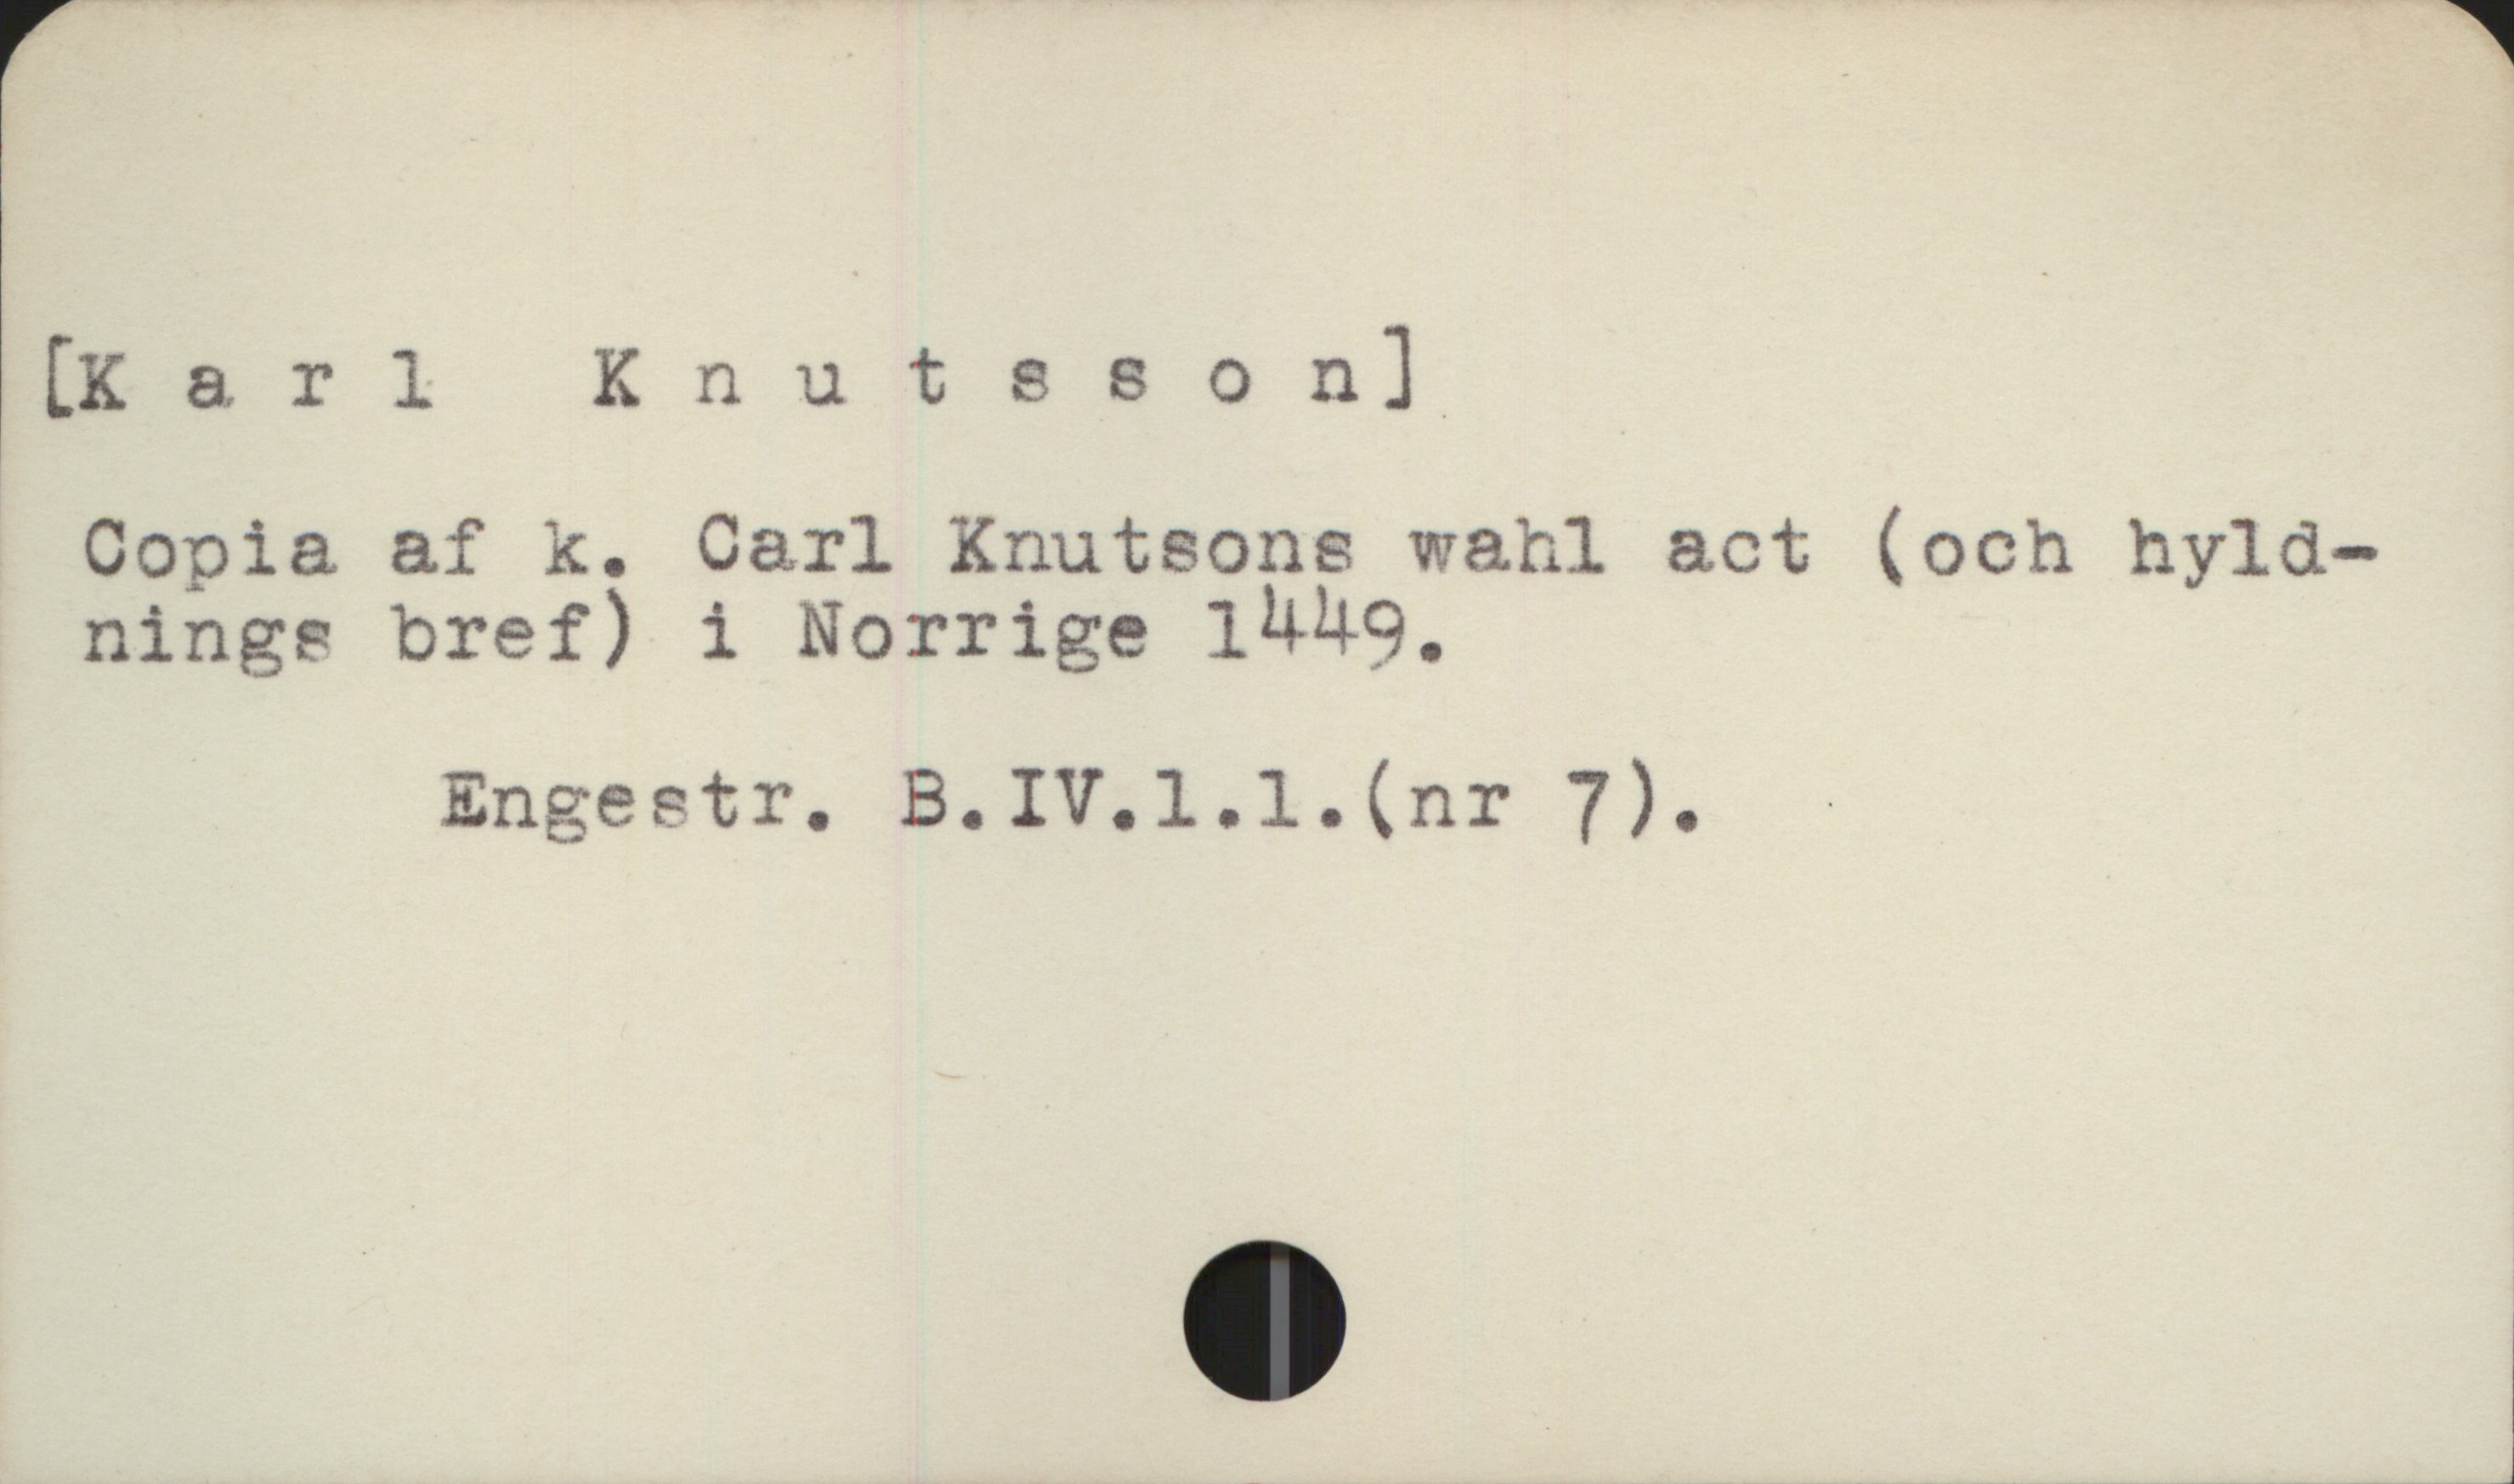  (Karl Knutsson]
Copia af k. Carl Knutsons wahl act (och hyld-
ninge bref) i Norrige 1449,

Engestr. B.IV.l1.l.(nr 7).

